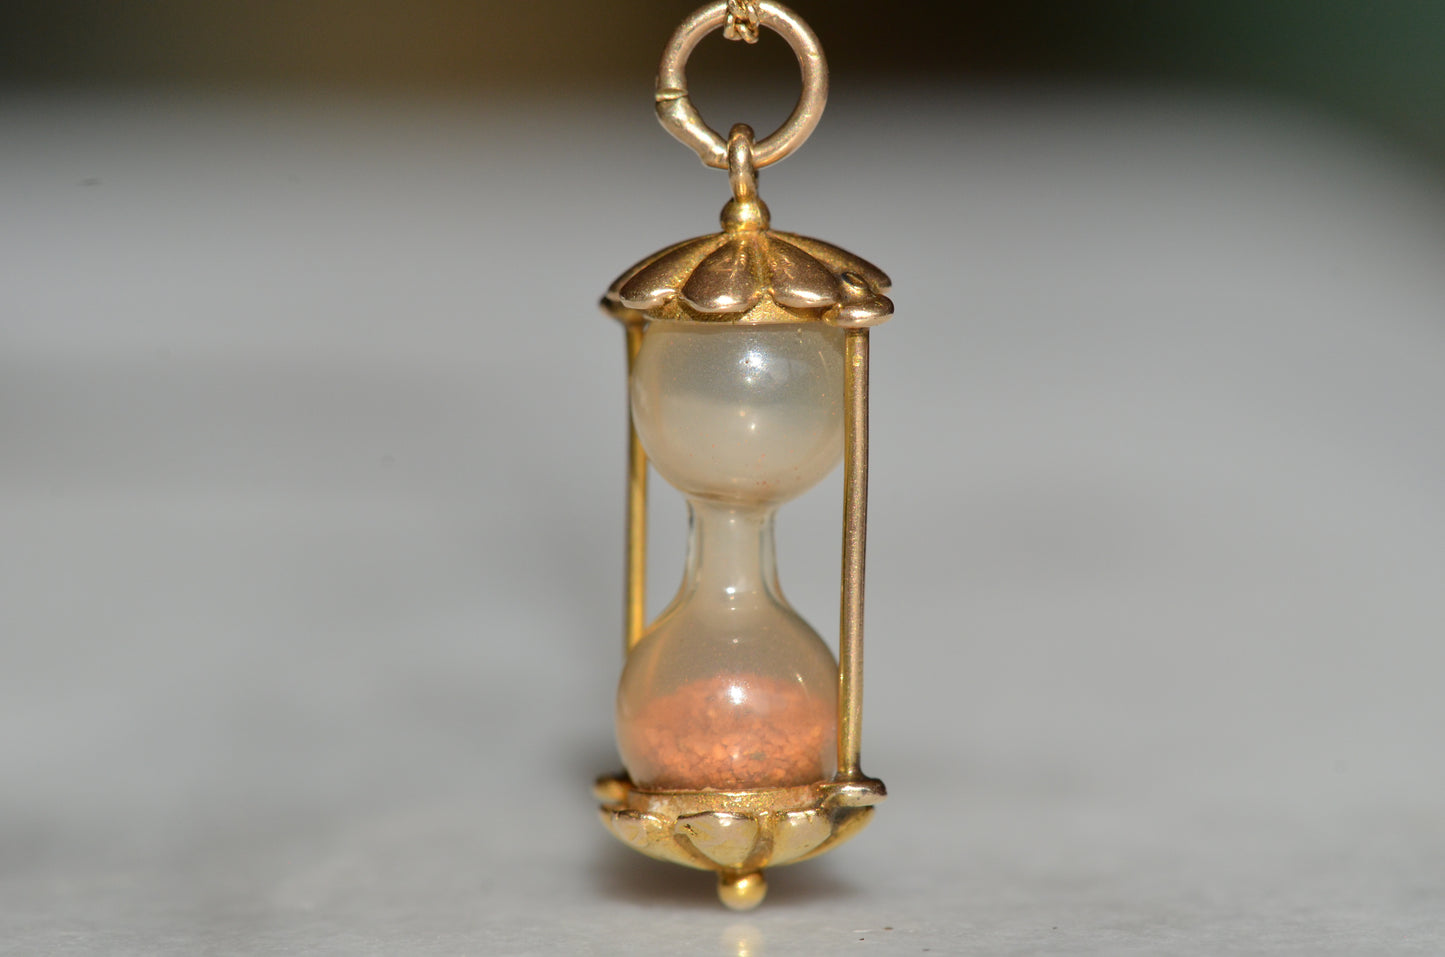 Vintage Mid Century Hourglass Charm